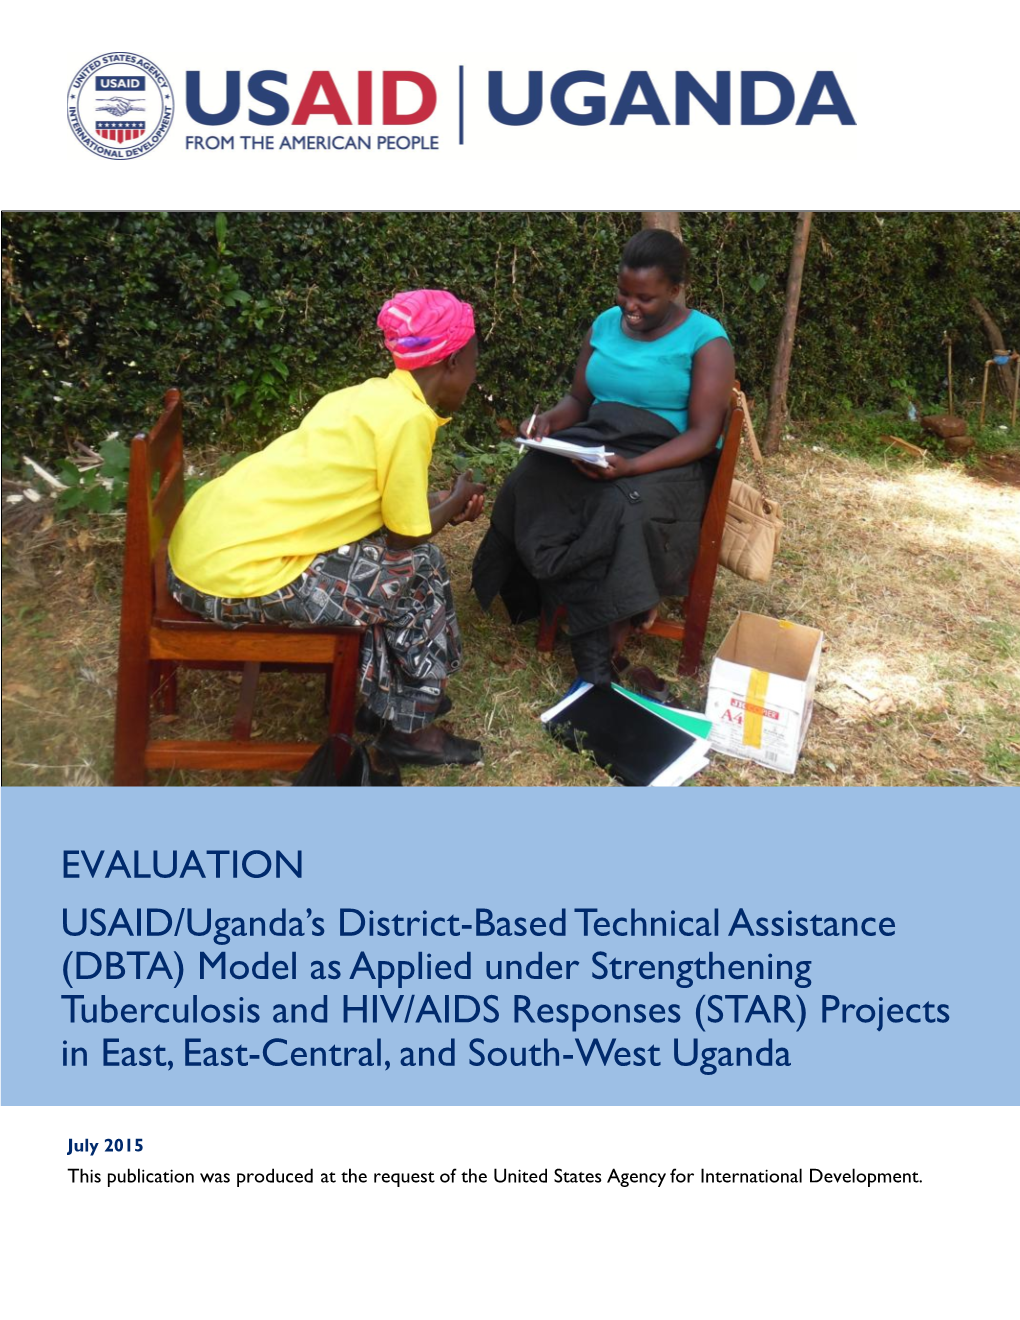 USAID/Uganda's District-Based Technical Assistance (DBTA) Model